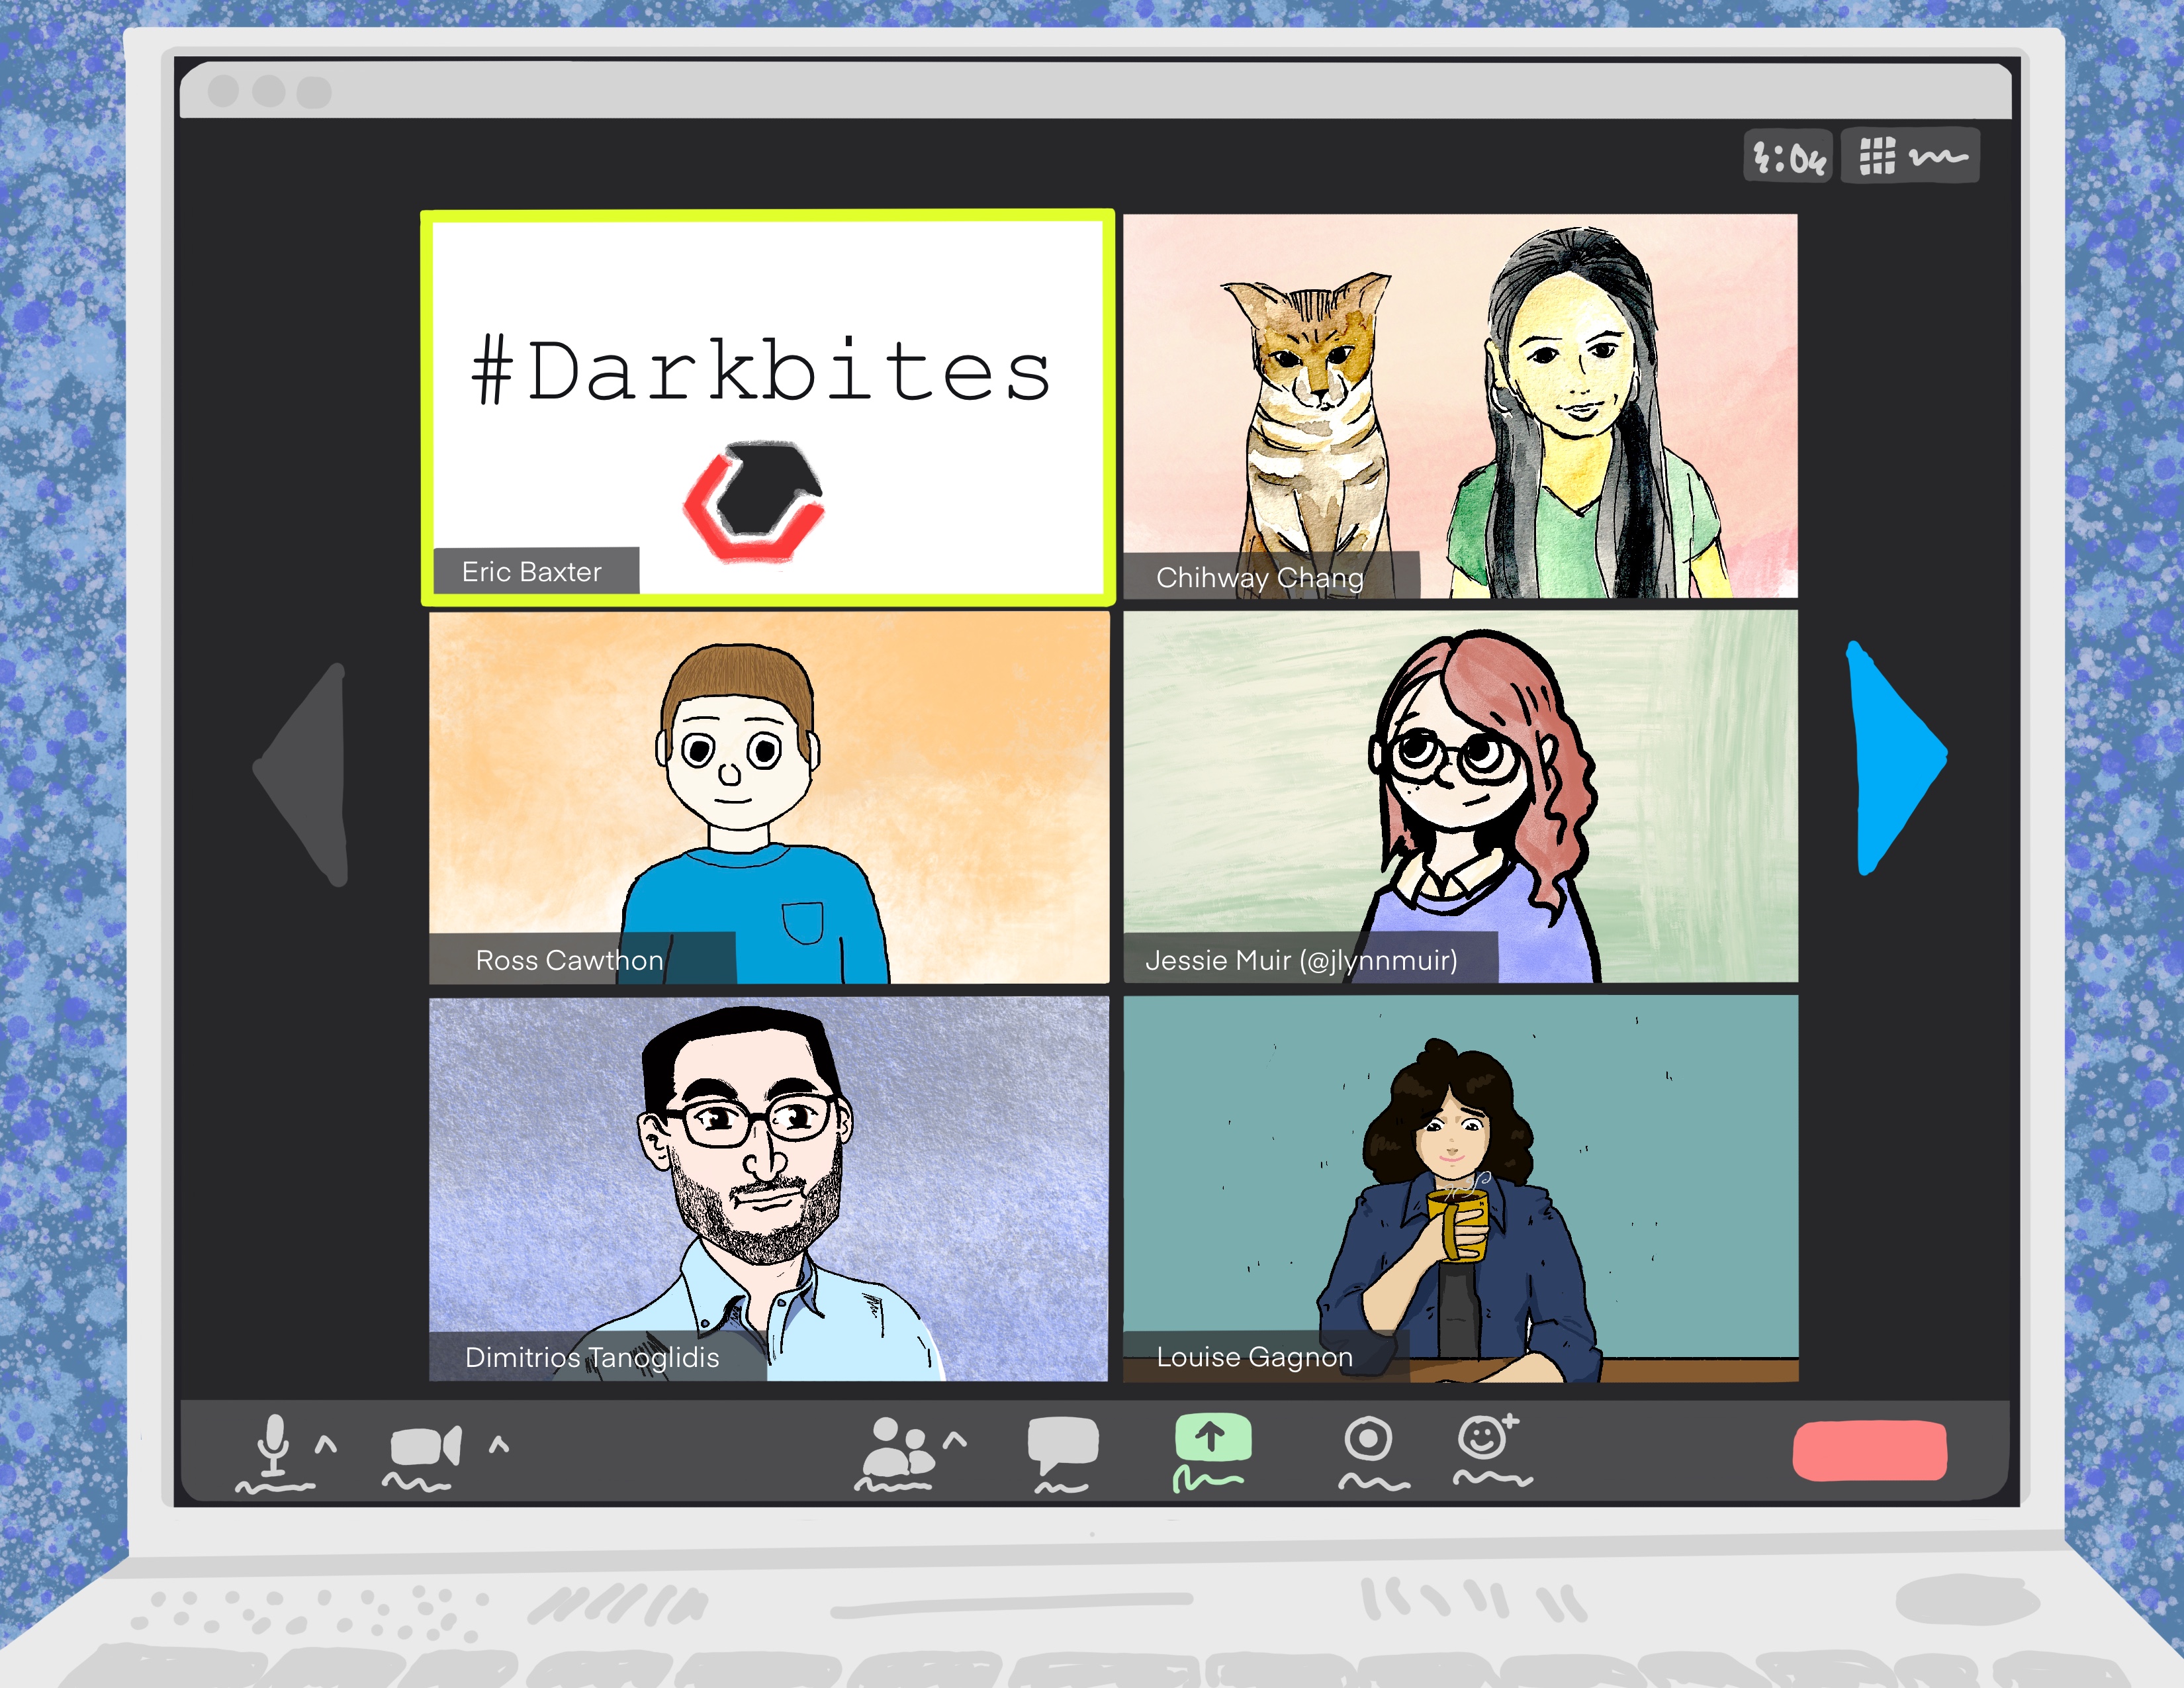 alt="Cartoon zoom window with self portraits of the darkbites contributors shown in each panel."